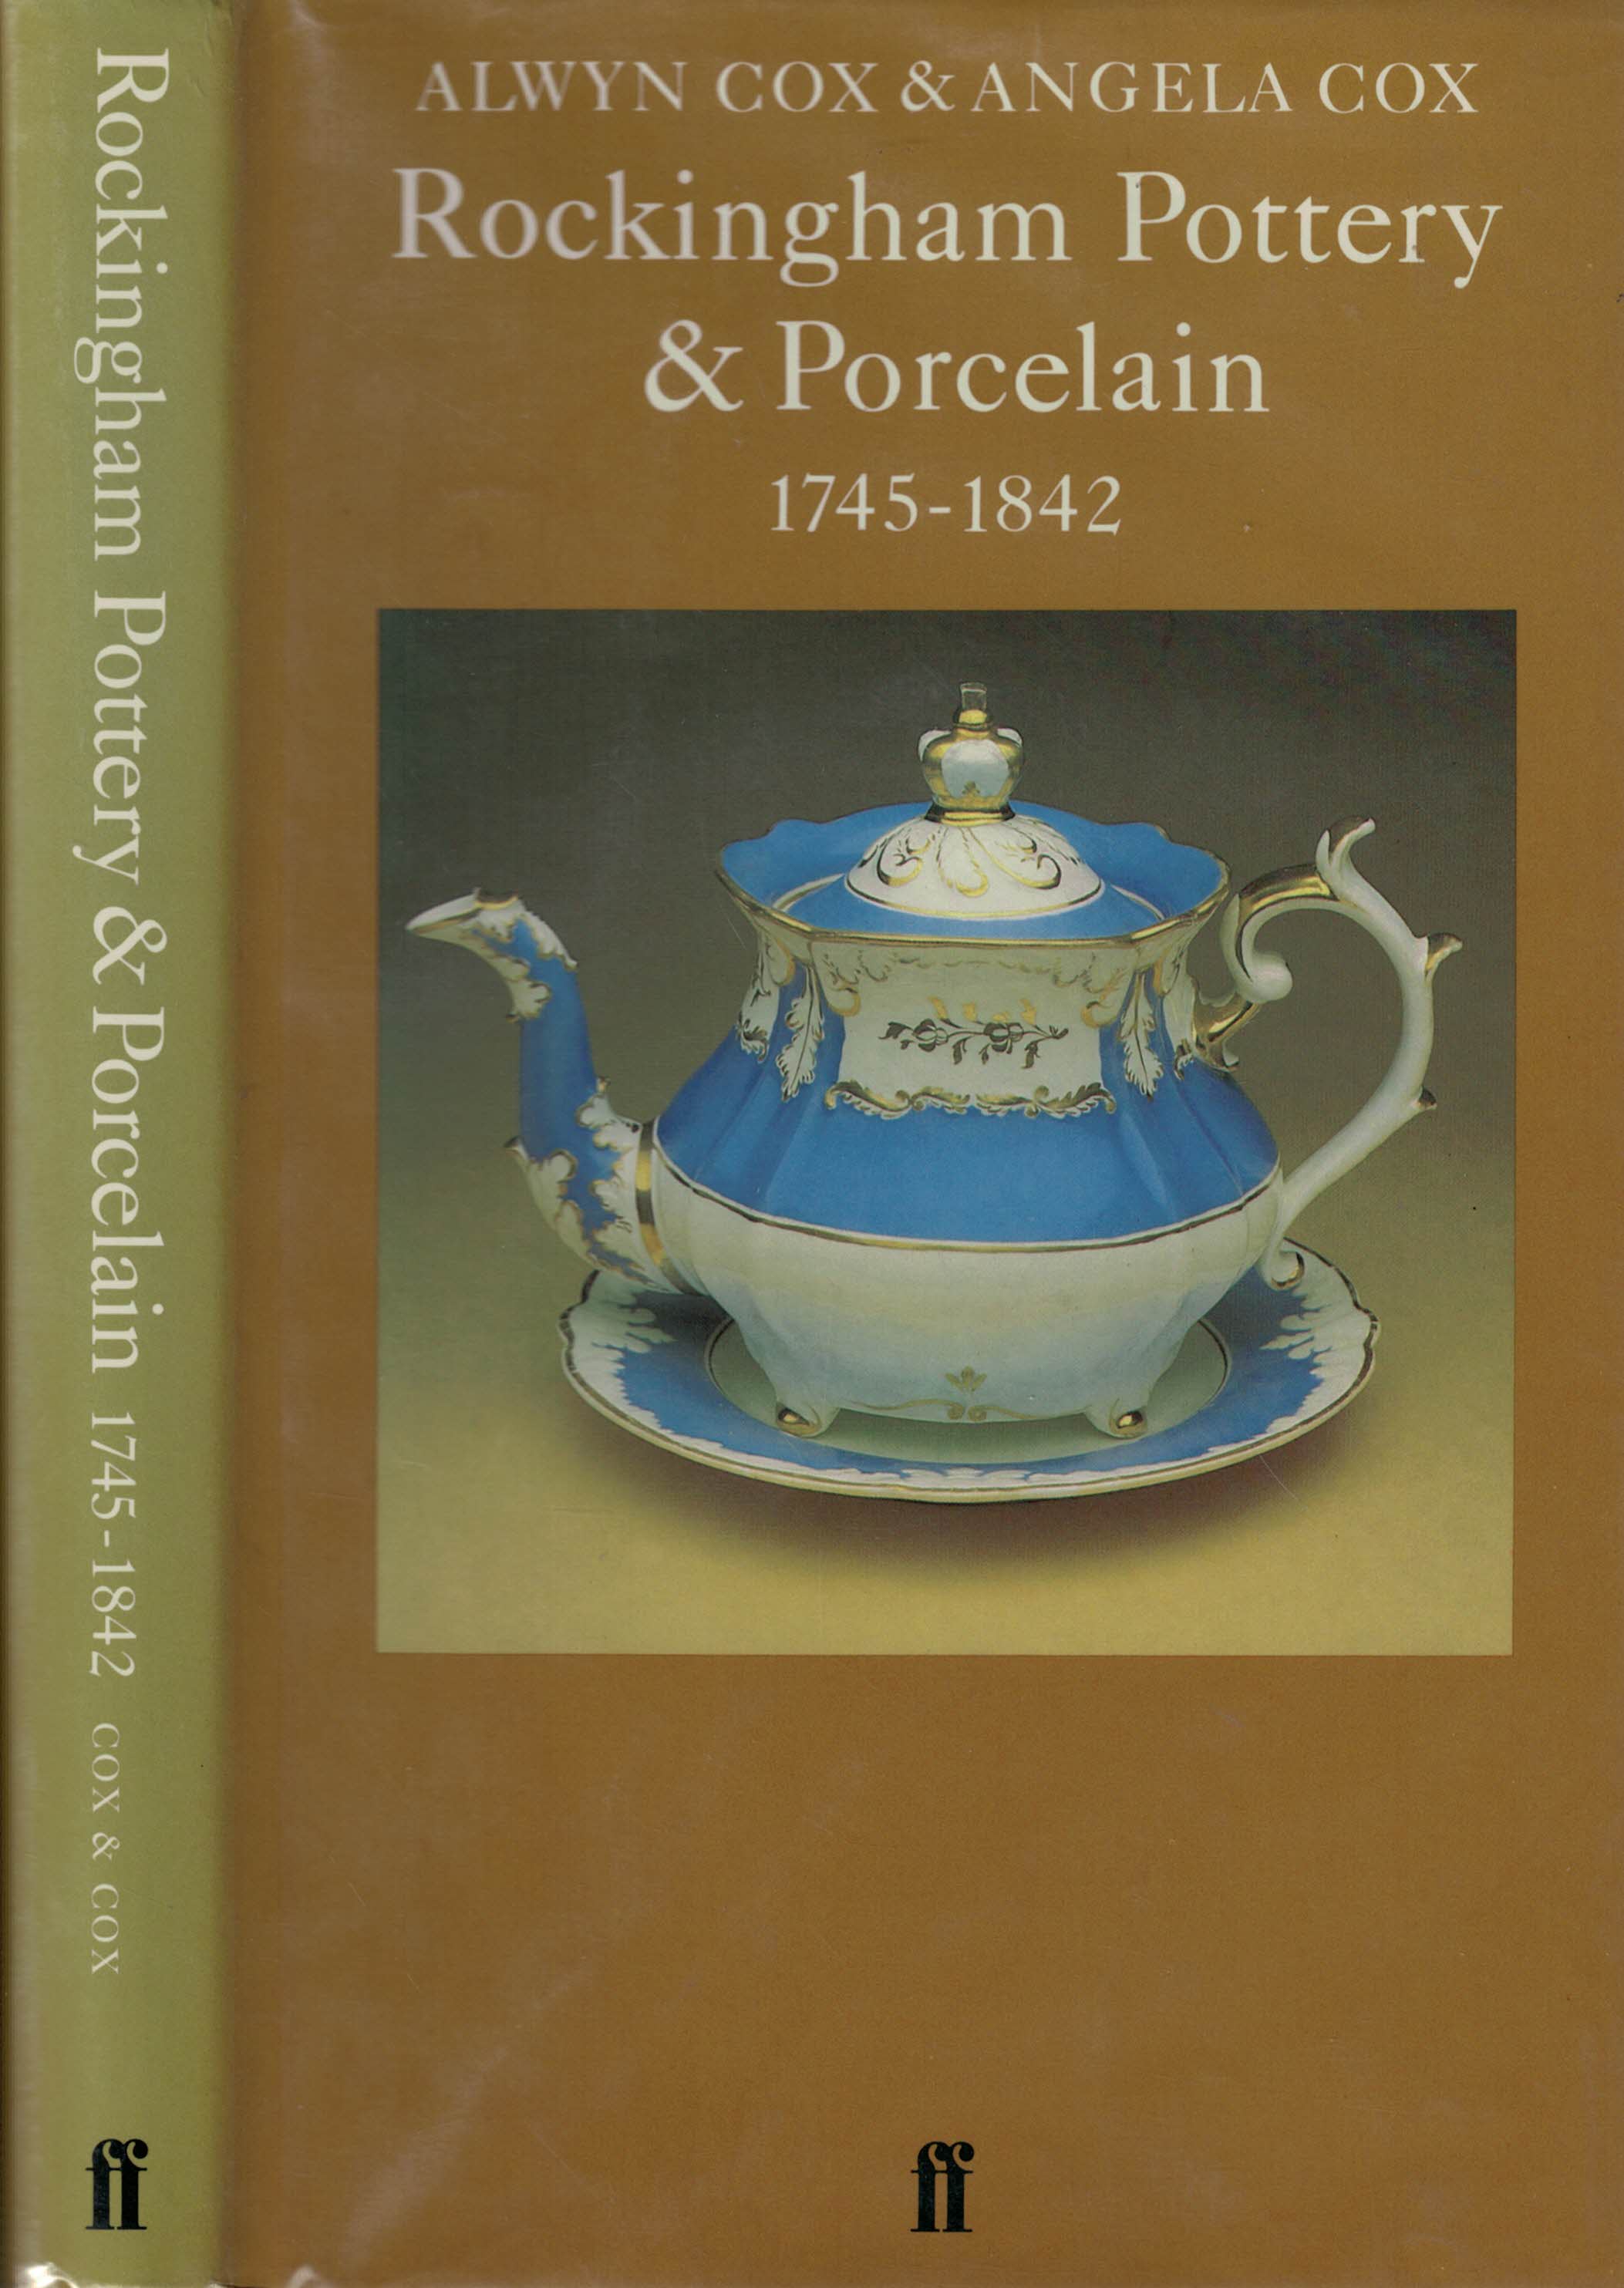 Rockingham Pottery & Porcelain 1745-1842